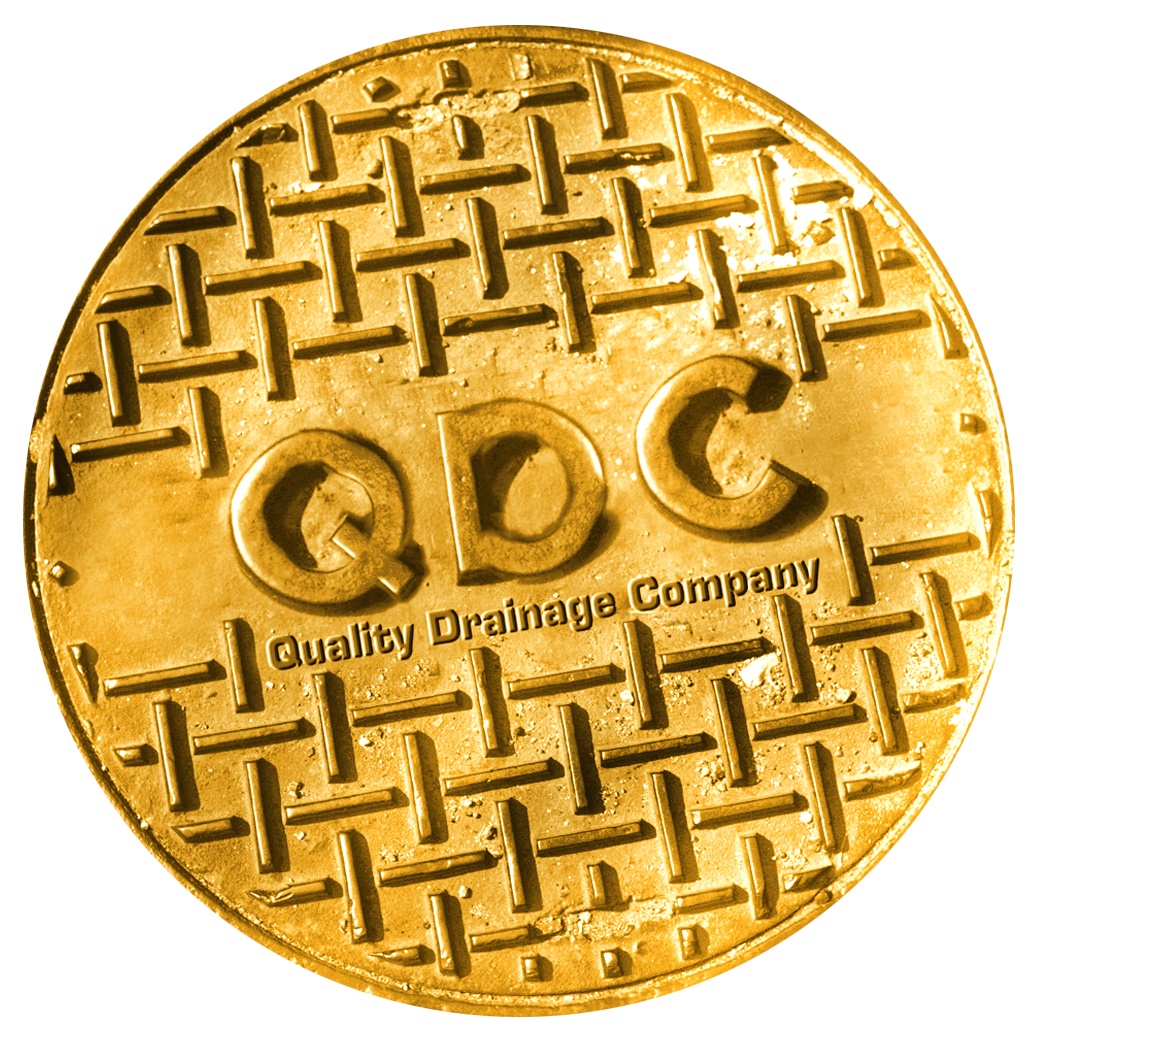 Quality Drainage Company Ltd